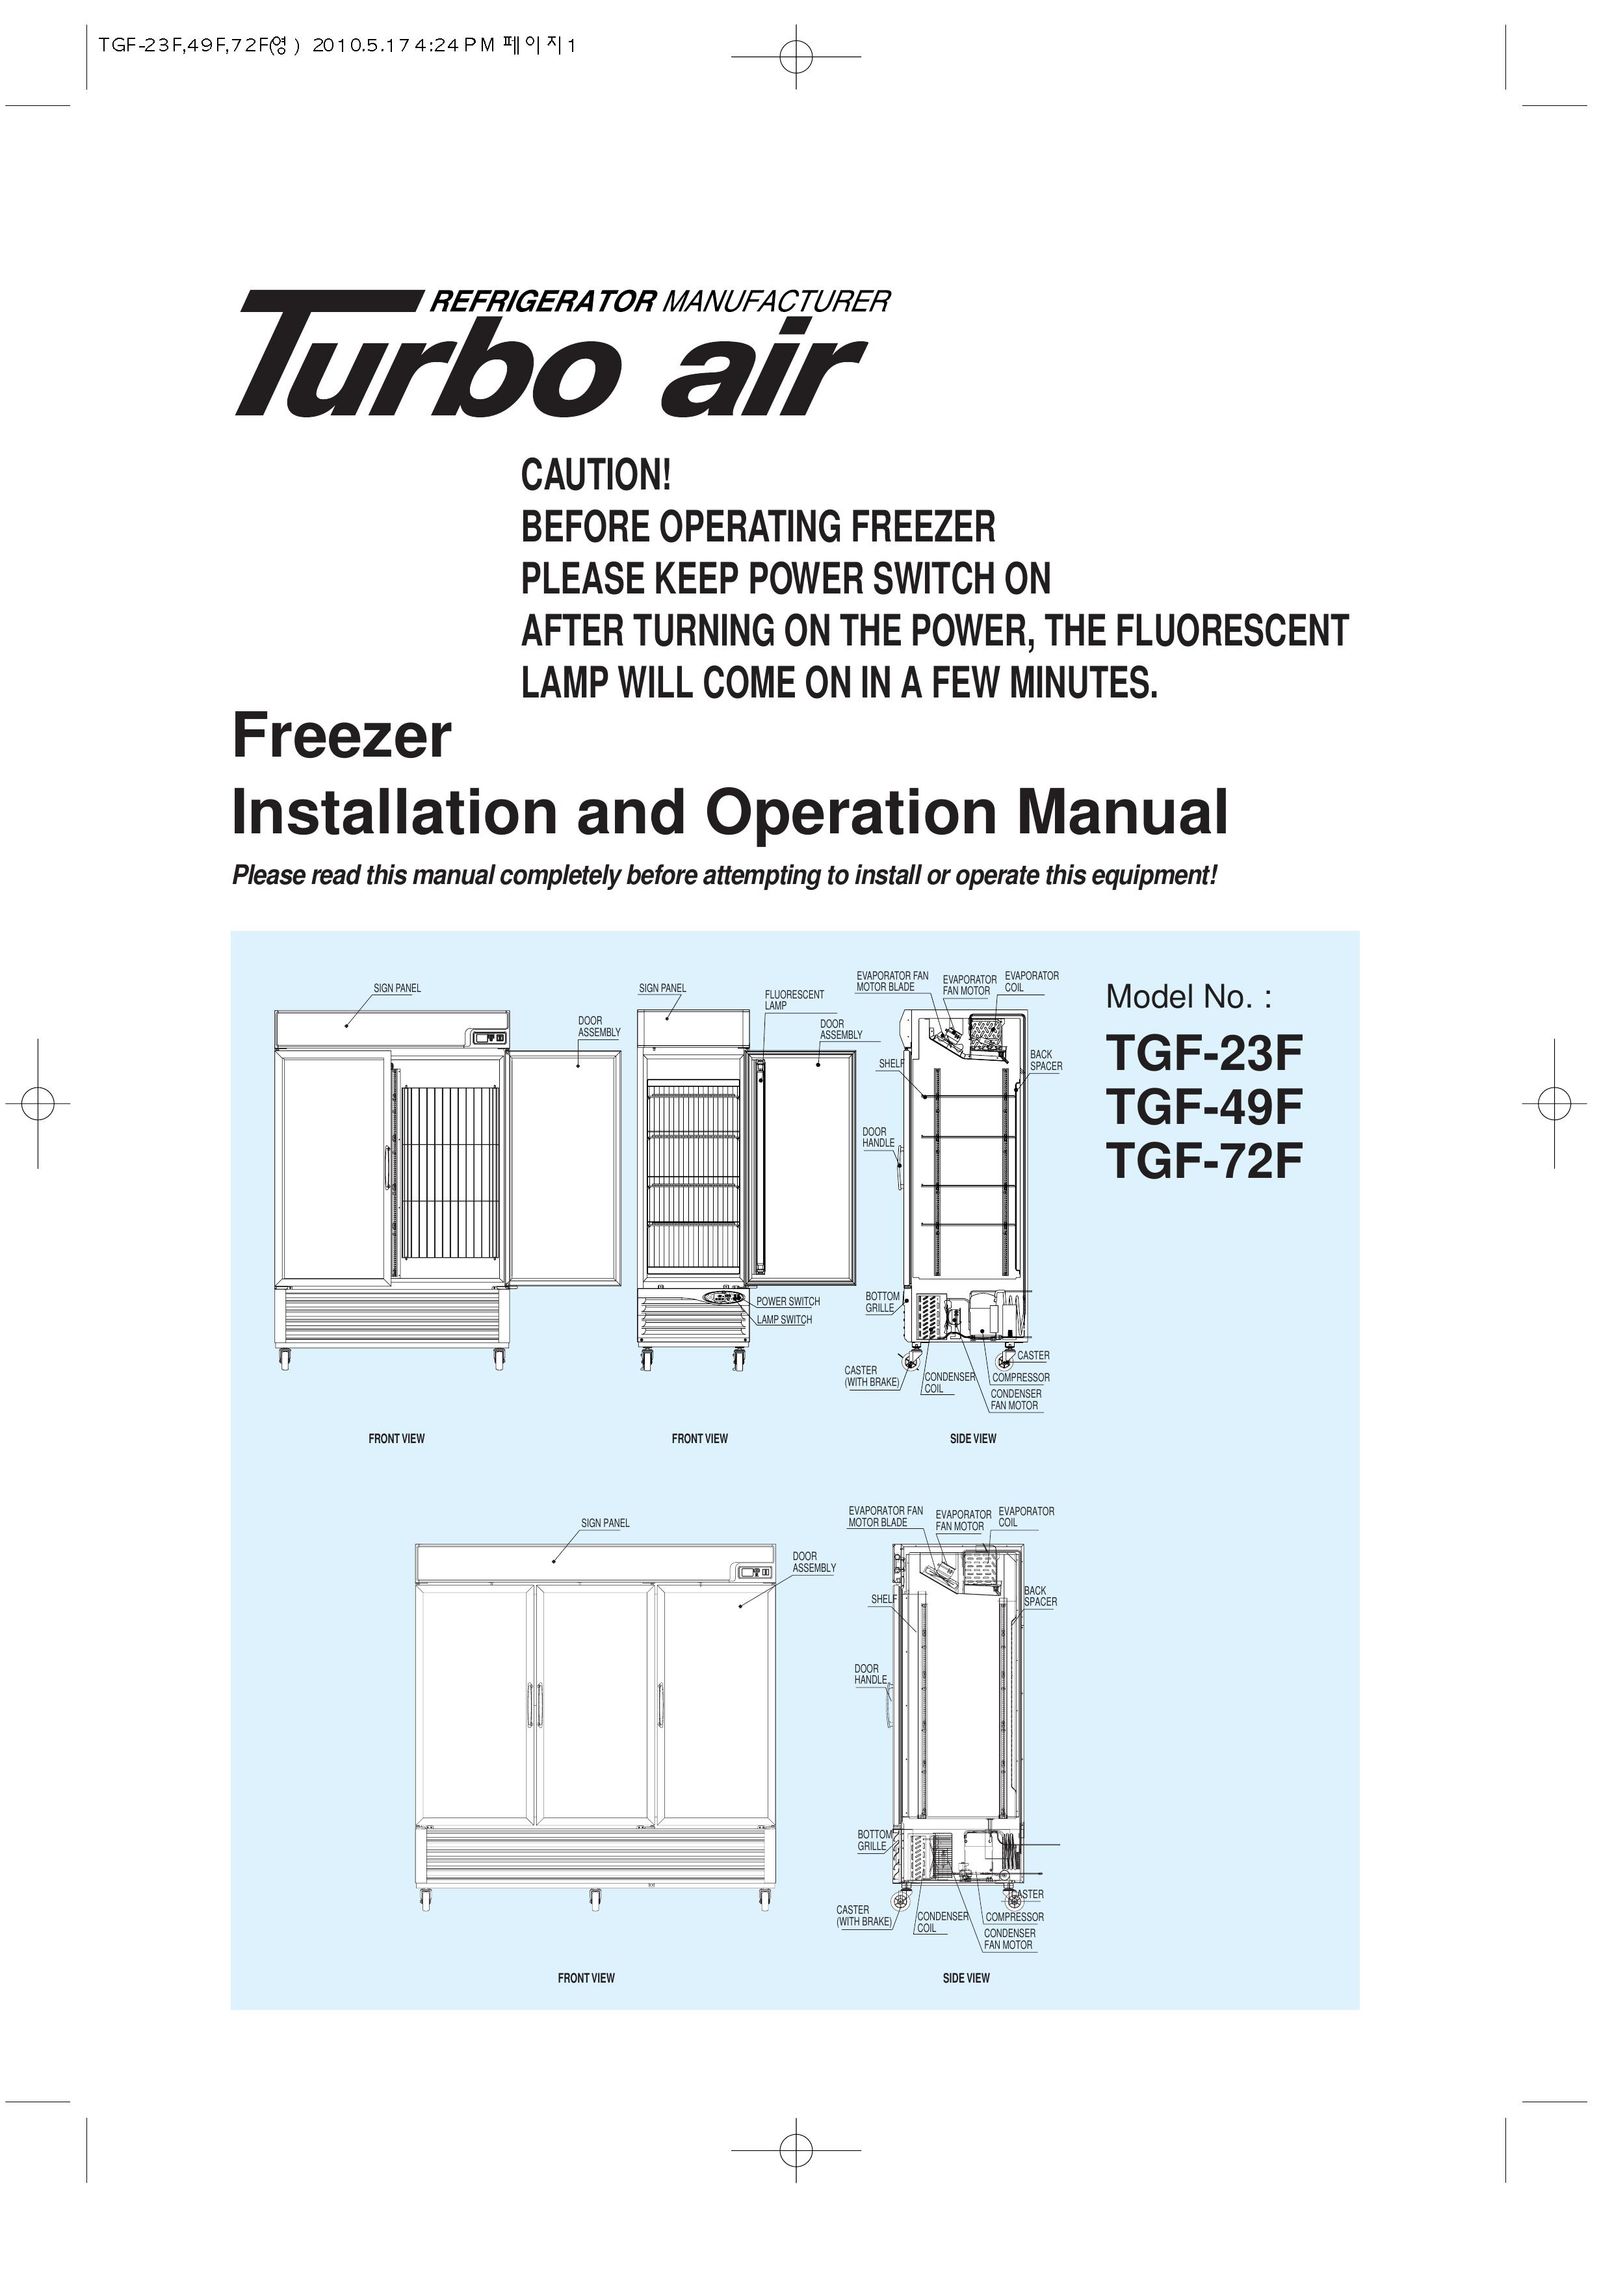 Turbo Air TGF-23F Freezer User Manual